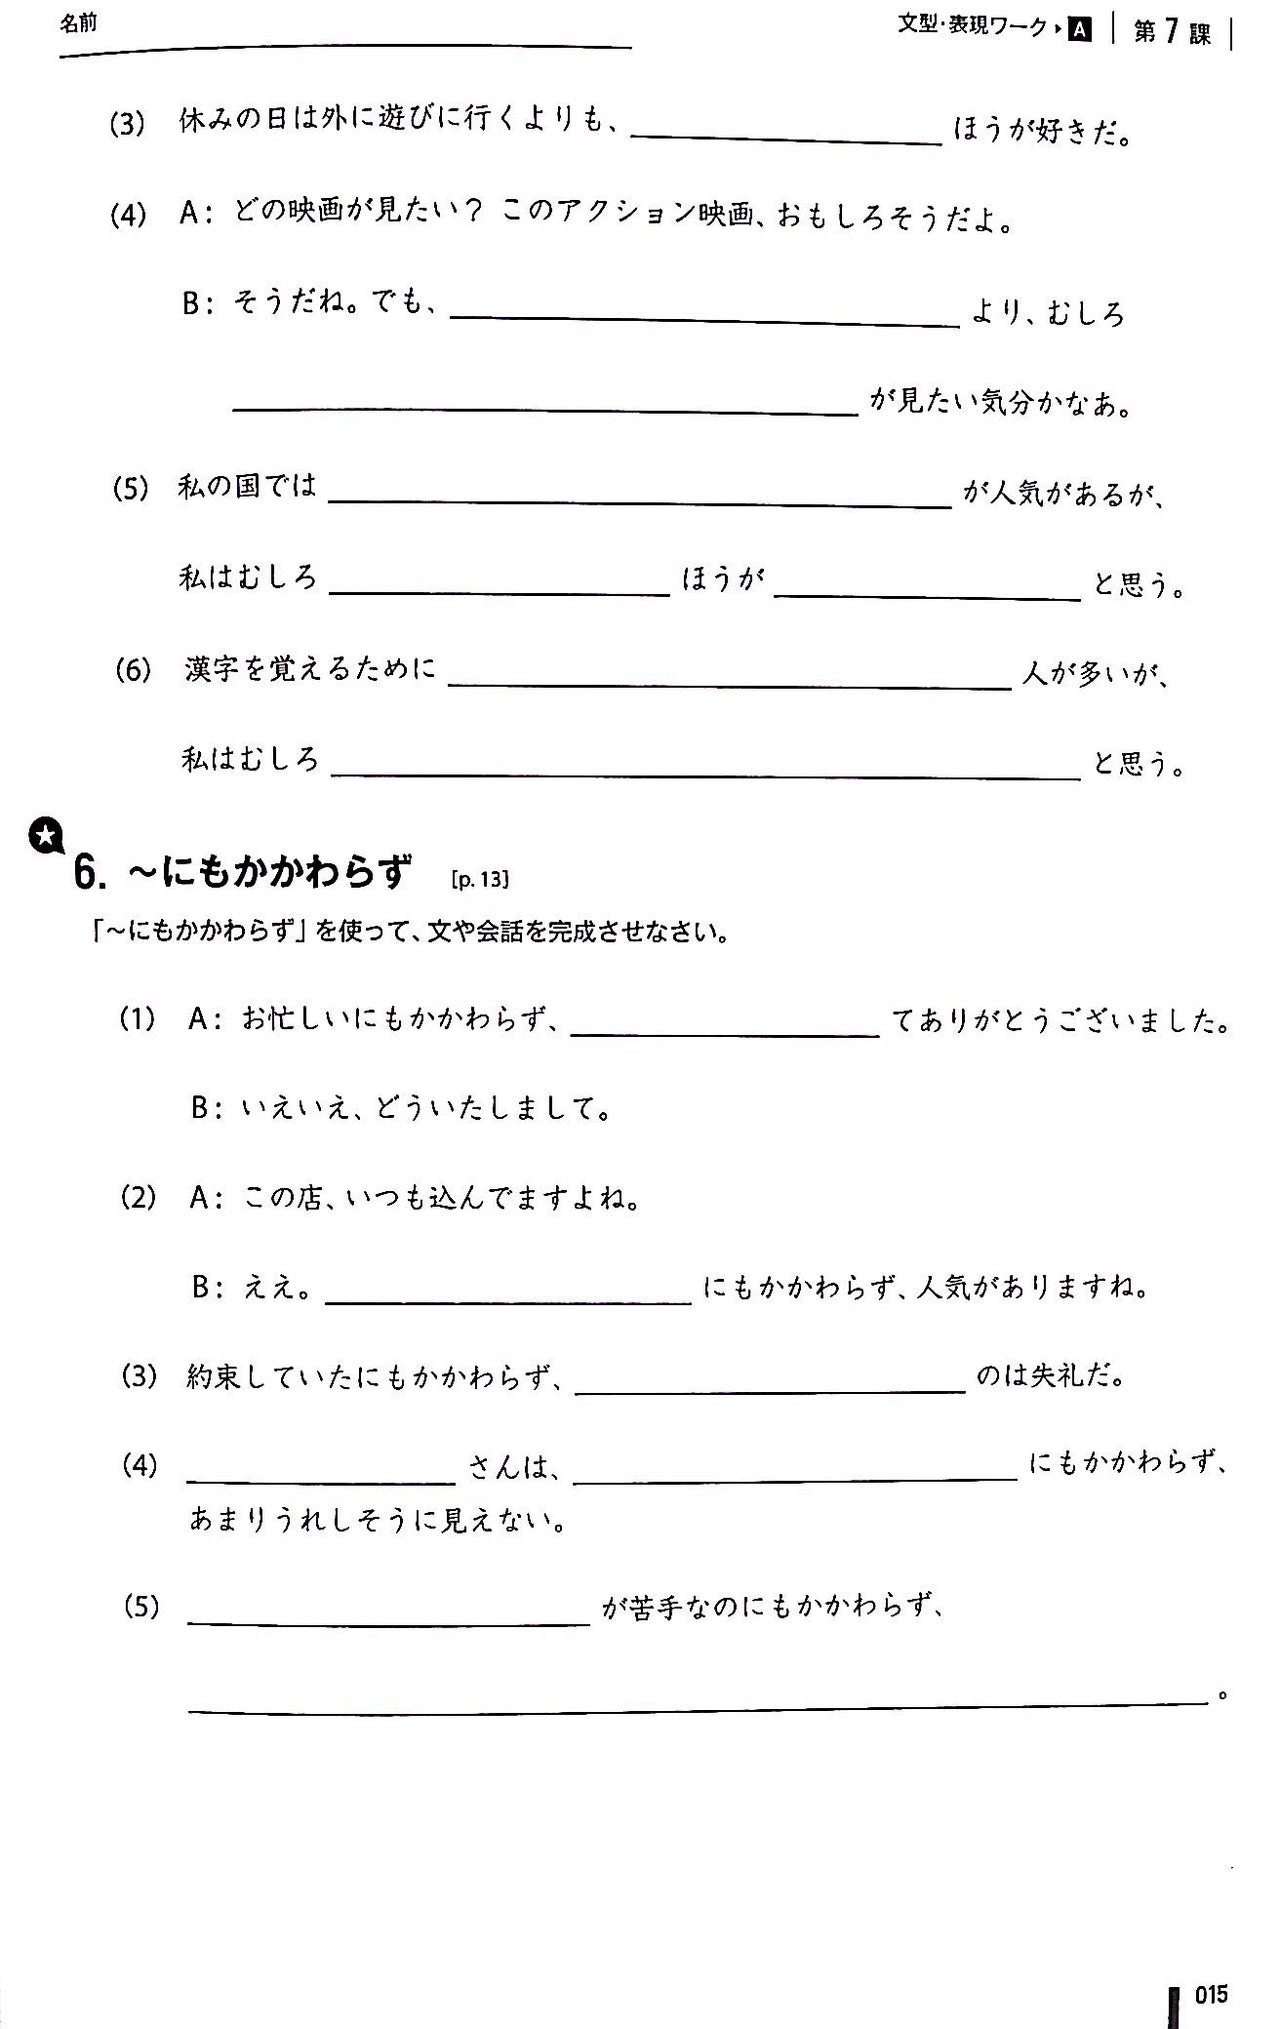 Quartet Vol 2 Workbook - Intermediate Japanese Across the Four Language Skills